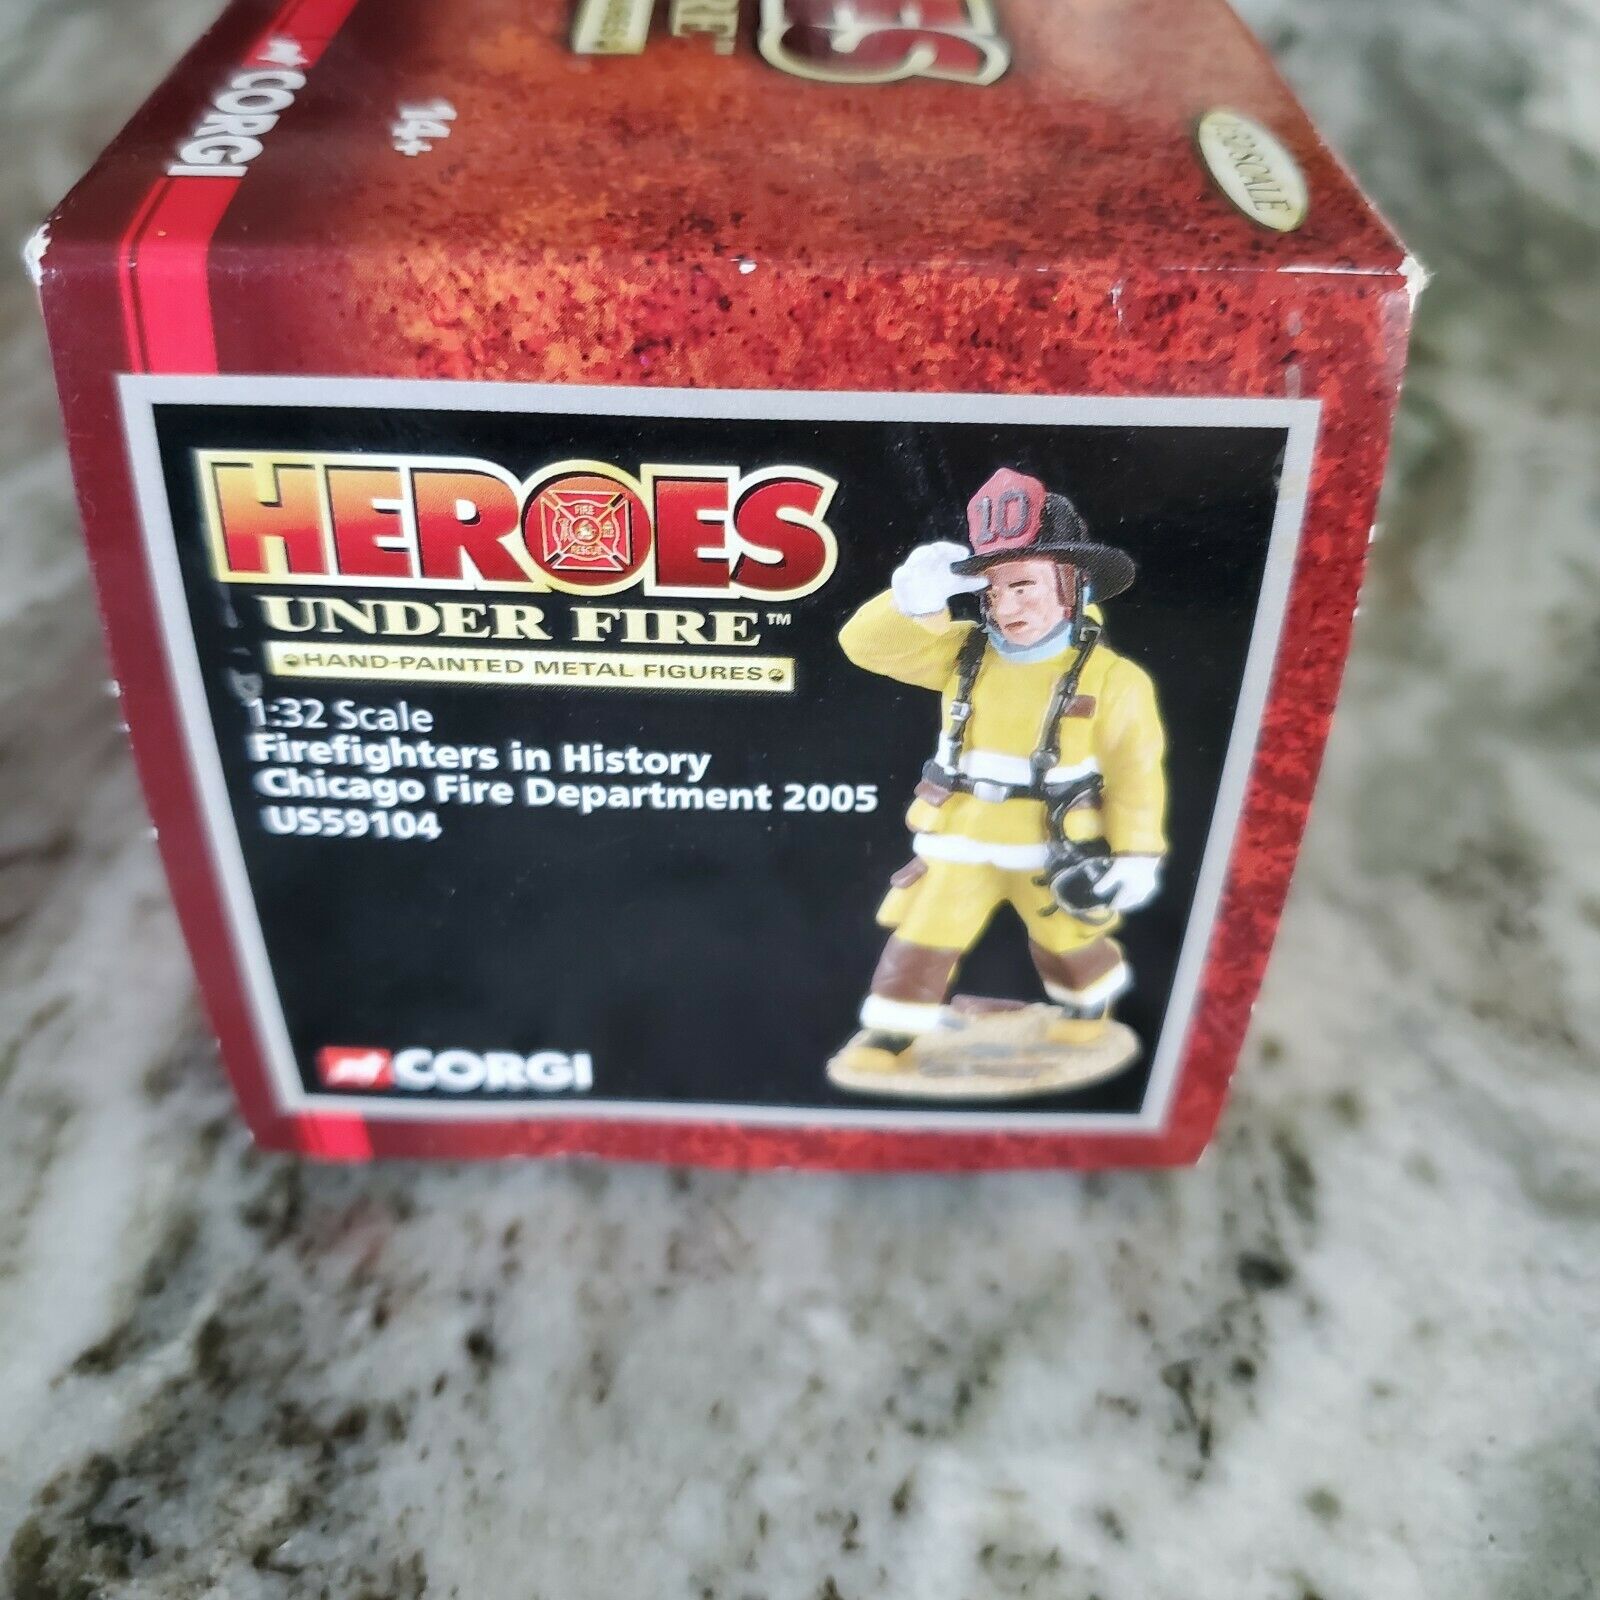 Metal Corgi Heroes Under Fire Chicago Fire Dept. 2005 Firefighter Figure Us59104